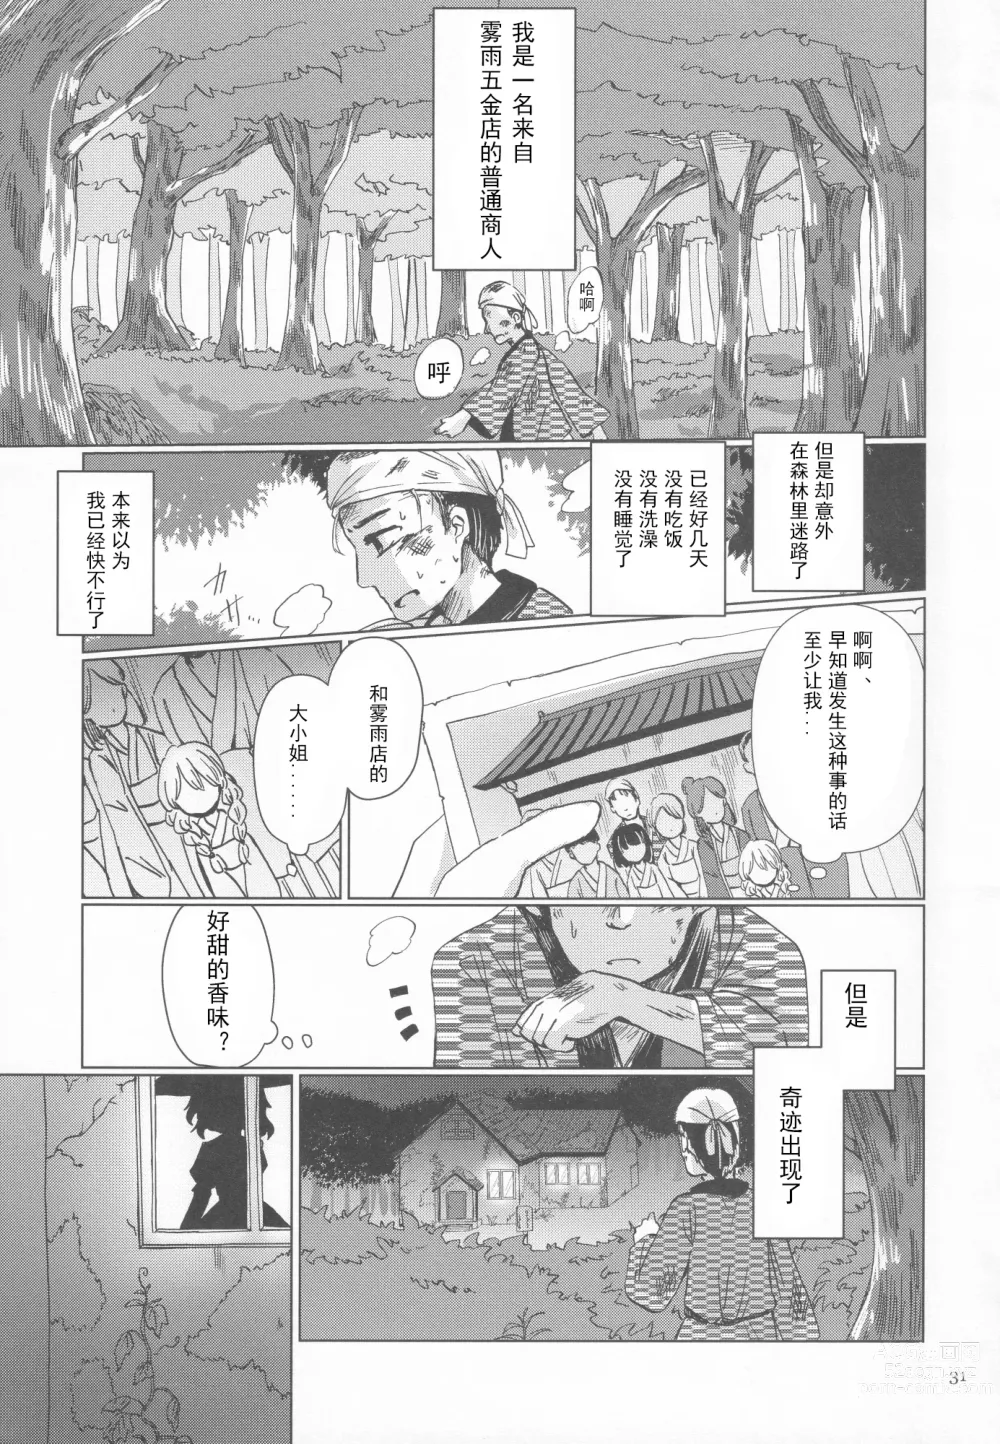 Page 30 of doujinshi Kirisame Mahouten Ura Course Goudou Kirisame Marisa no Ura Kagyou